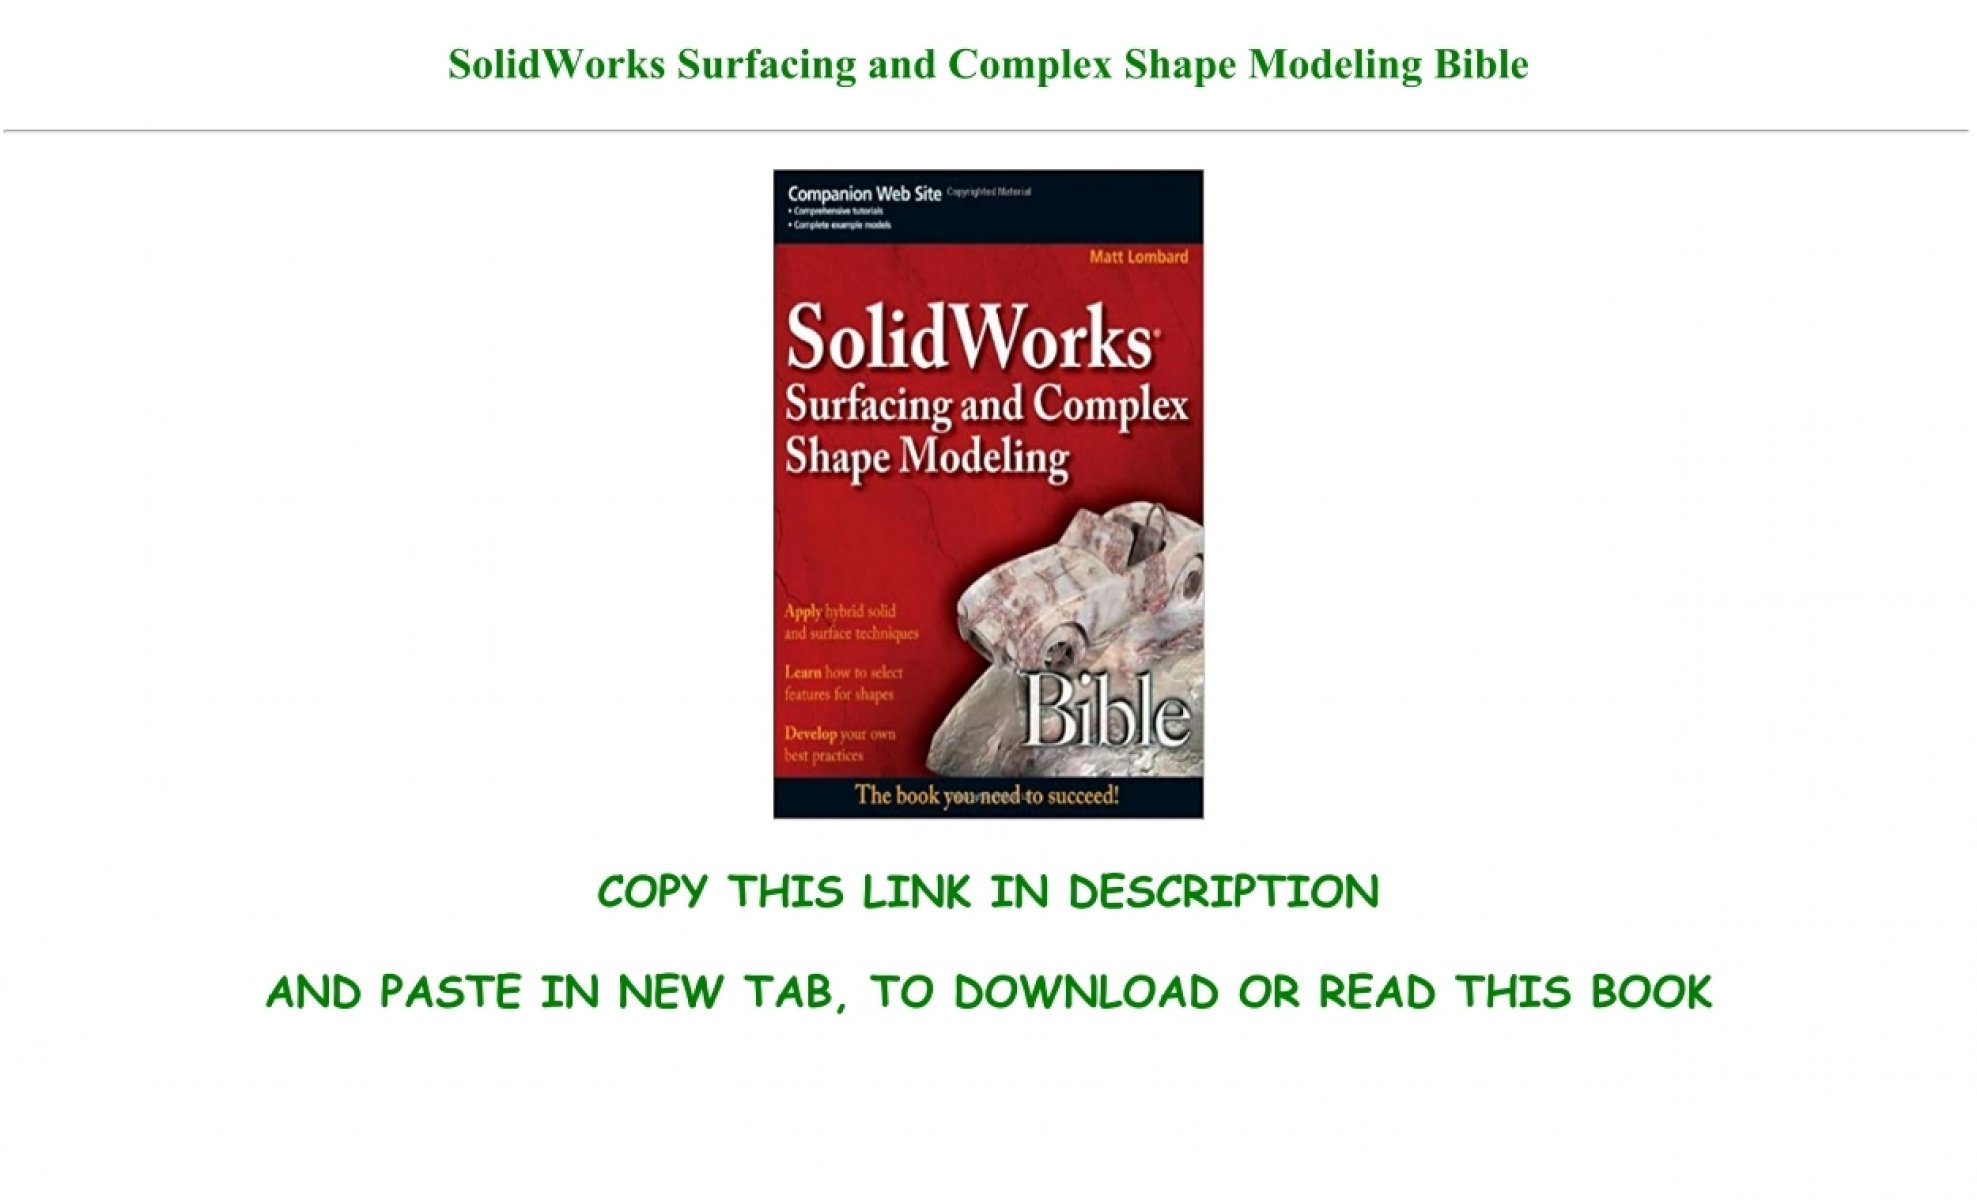 solidworks bible 2014 pdf free download